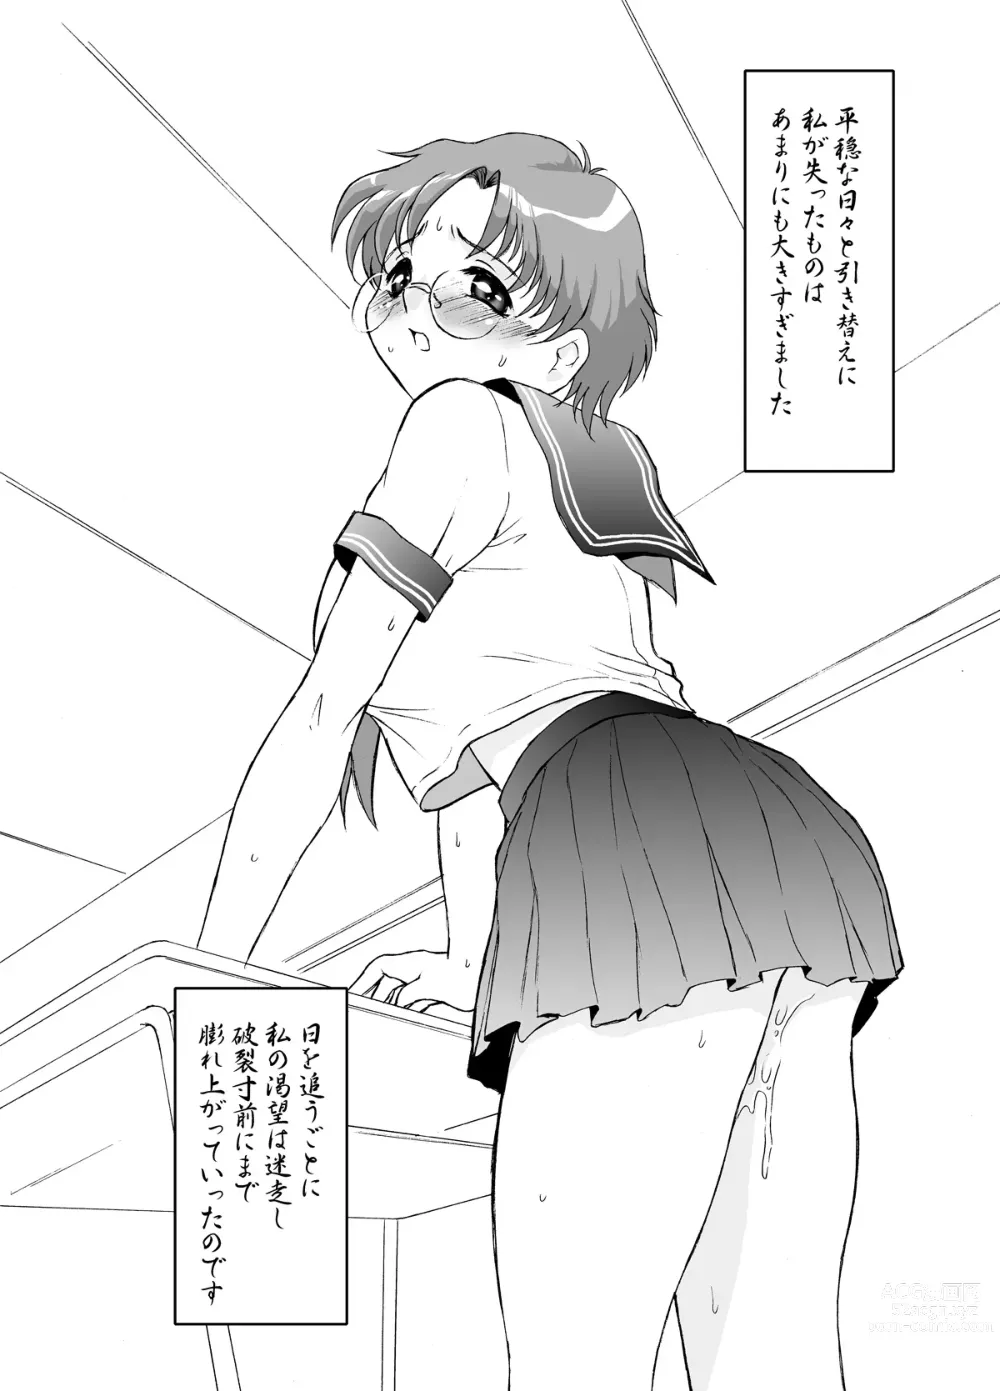 Page 11 of doujinshi SM